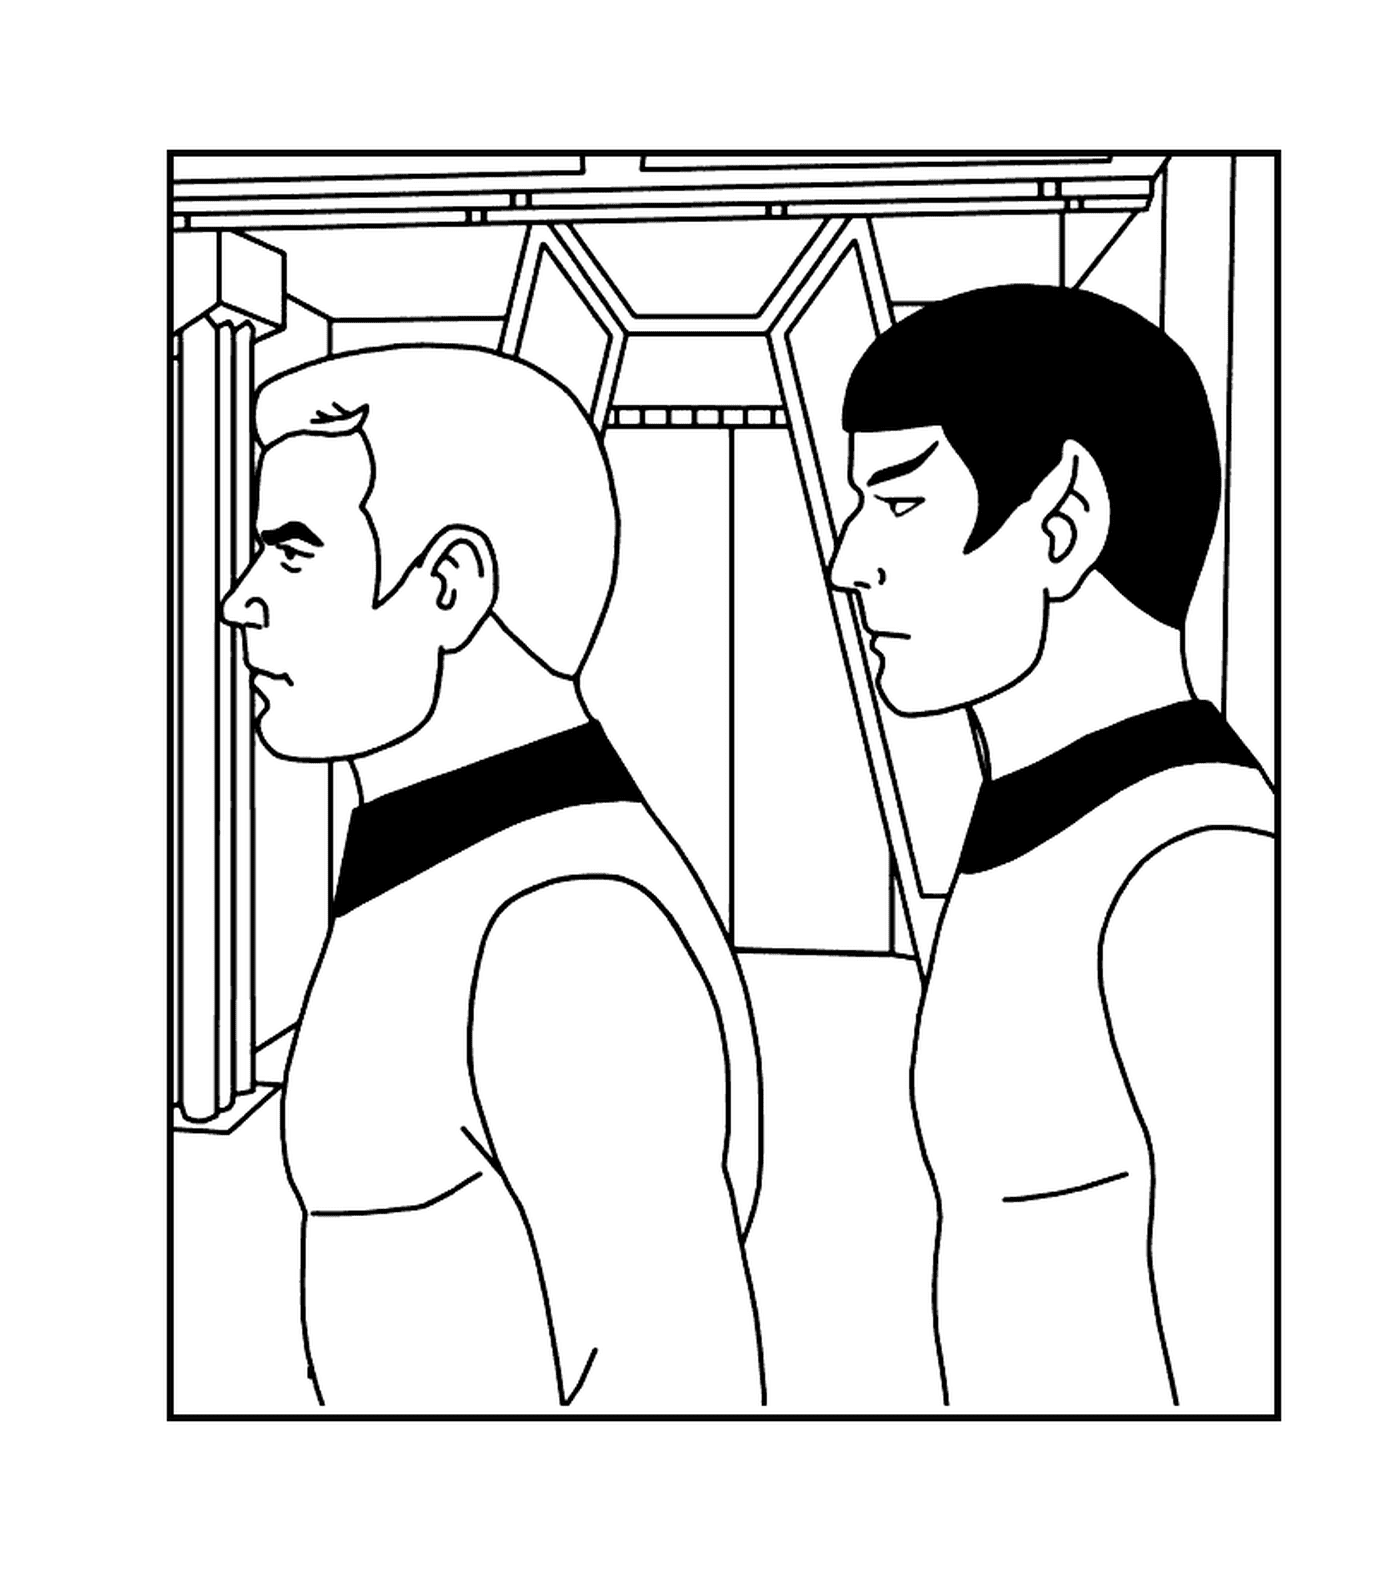  Spock y Kirk por Star Trek 